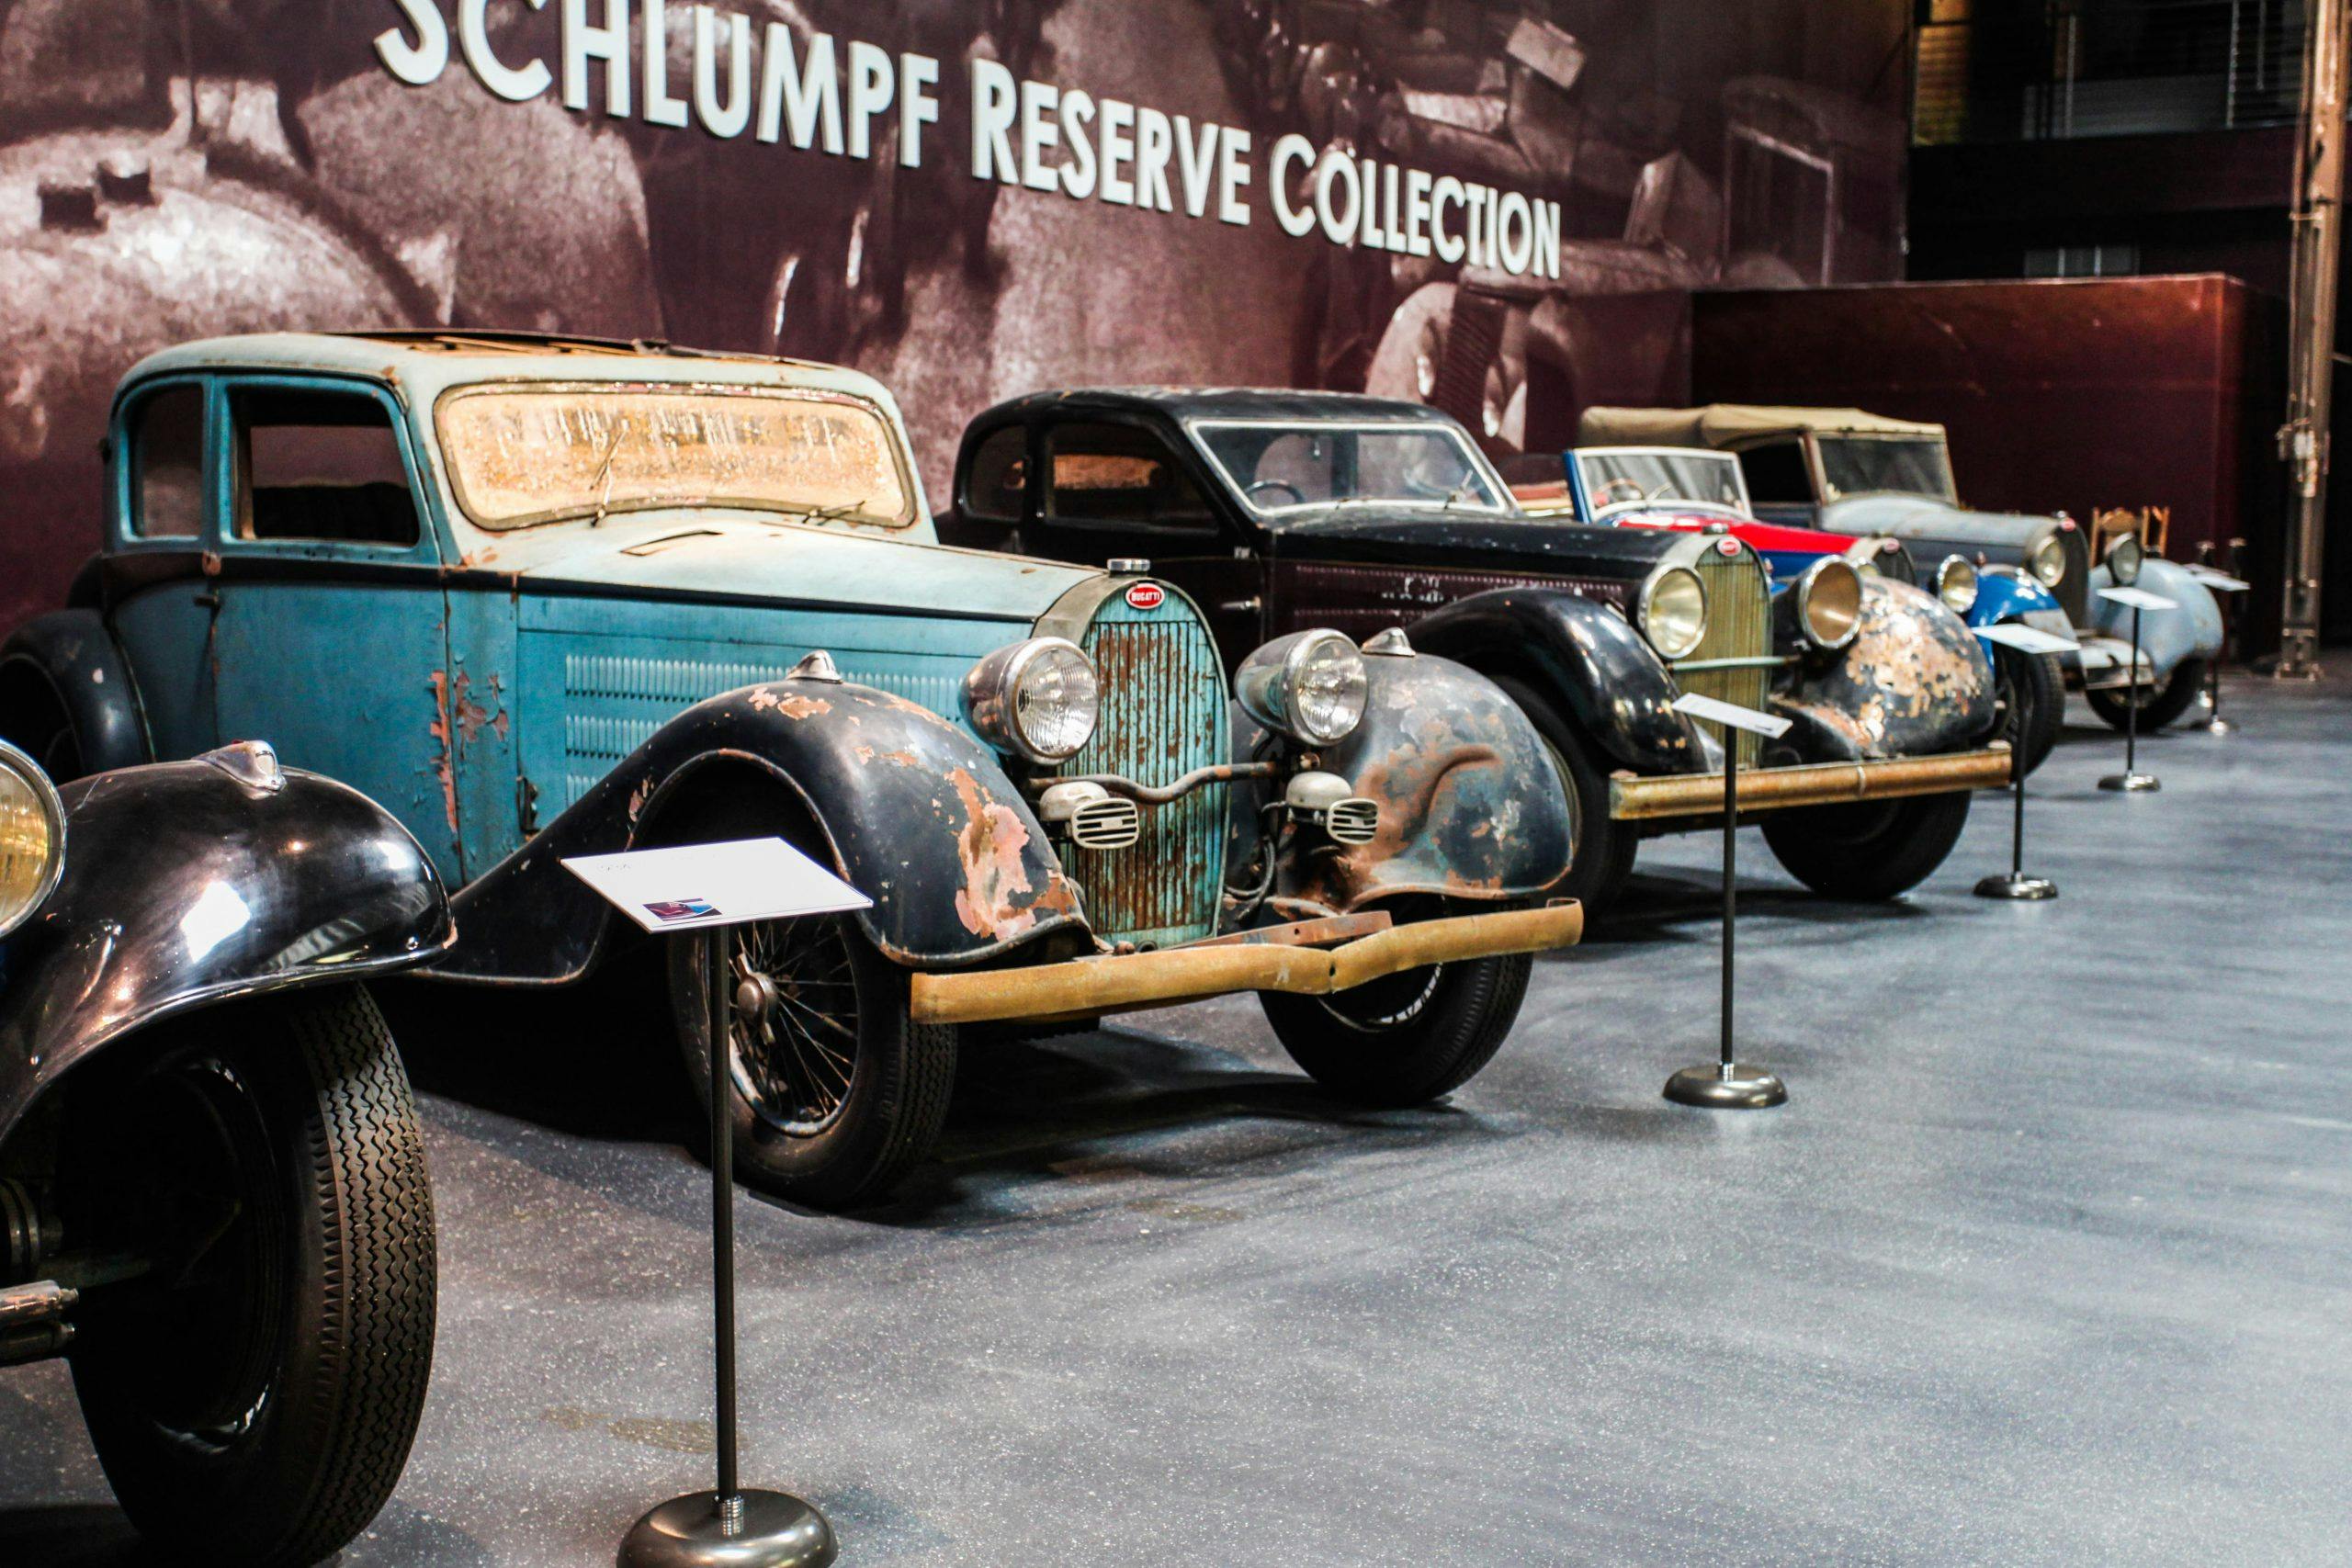 Bugatti Collection Fritz Schlumpfphoto